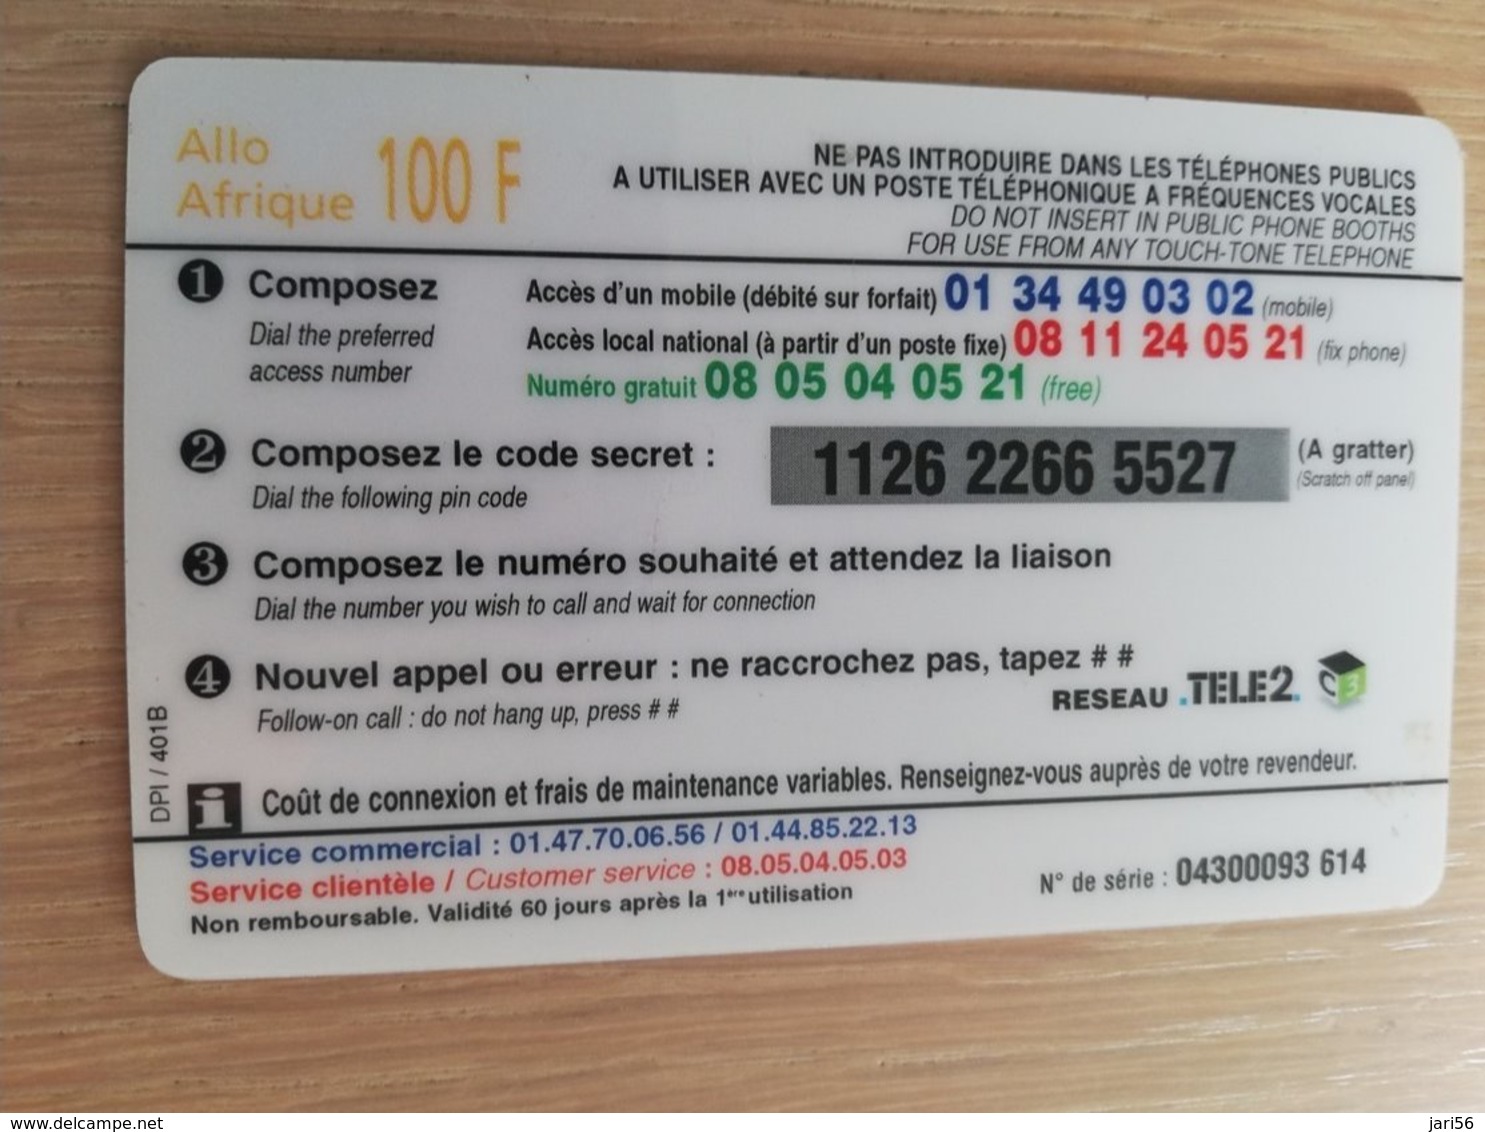 FRANCE/FRANKRIJK  ALLO AFRIQUE 100 FR  PREPAID  USED    ** 1512** - Per Cellulari (telefonini/schede SIM)